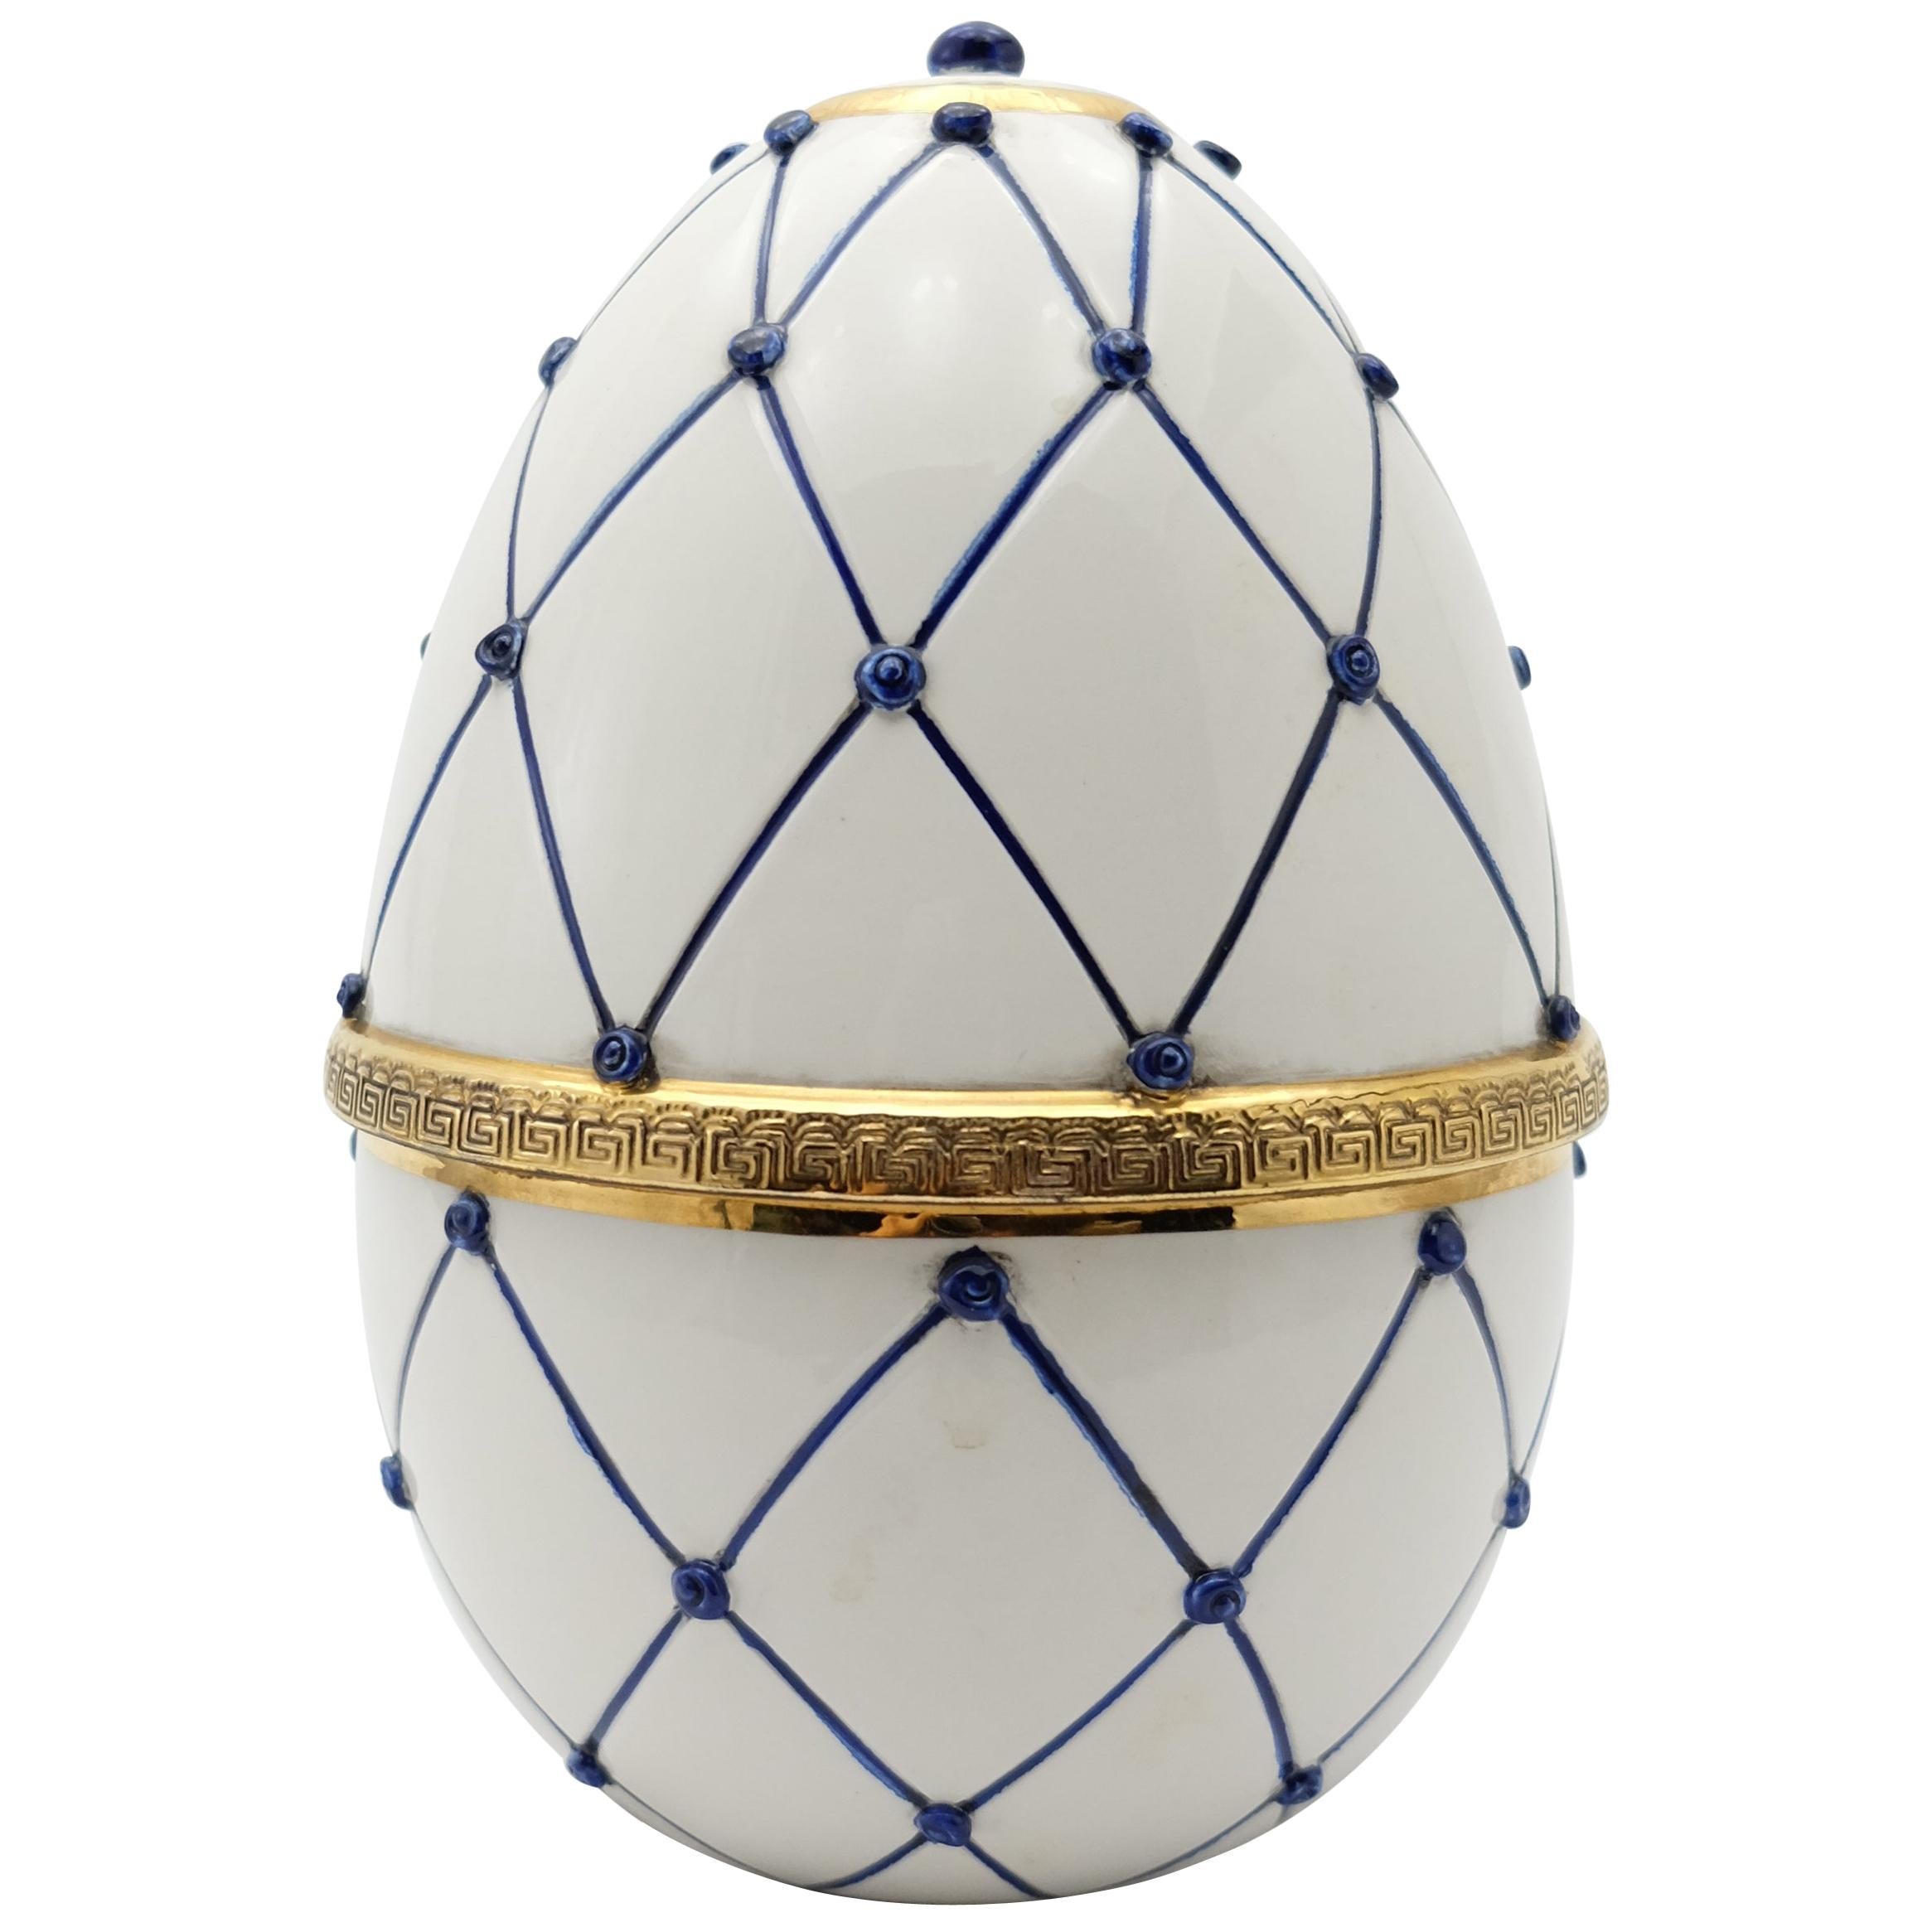 Sigma L2 Italian Ceramic Retentions Blue and Gilt Bronze "Egg Form" Covered Box For Sale